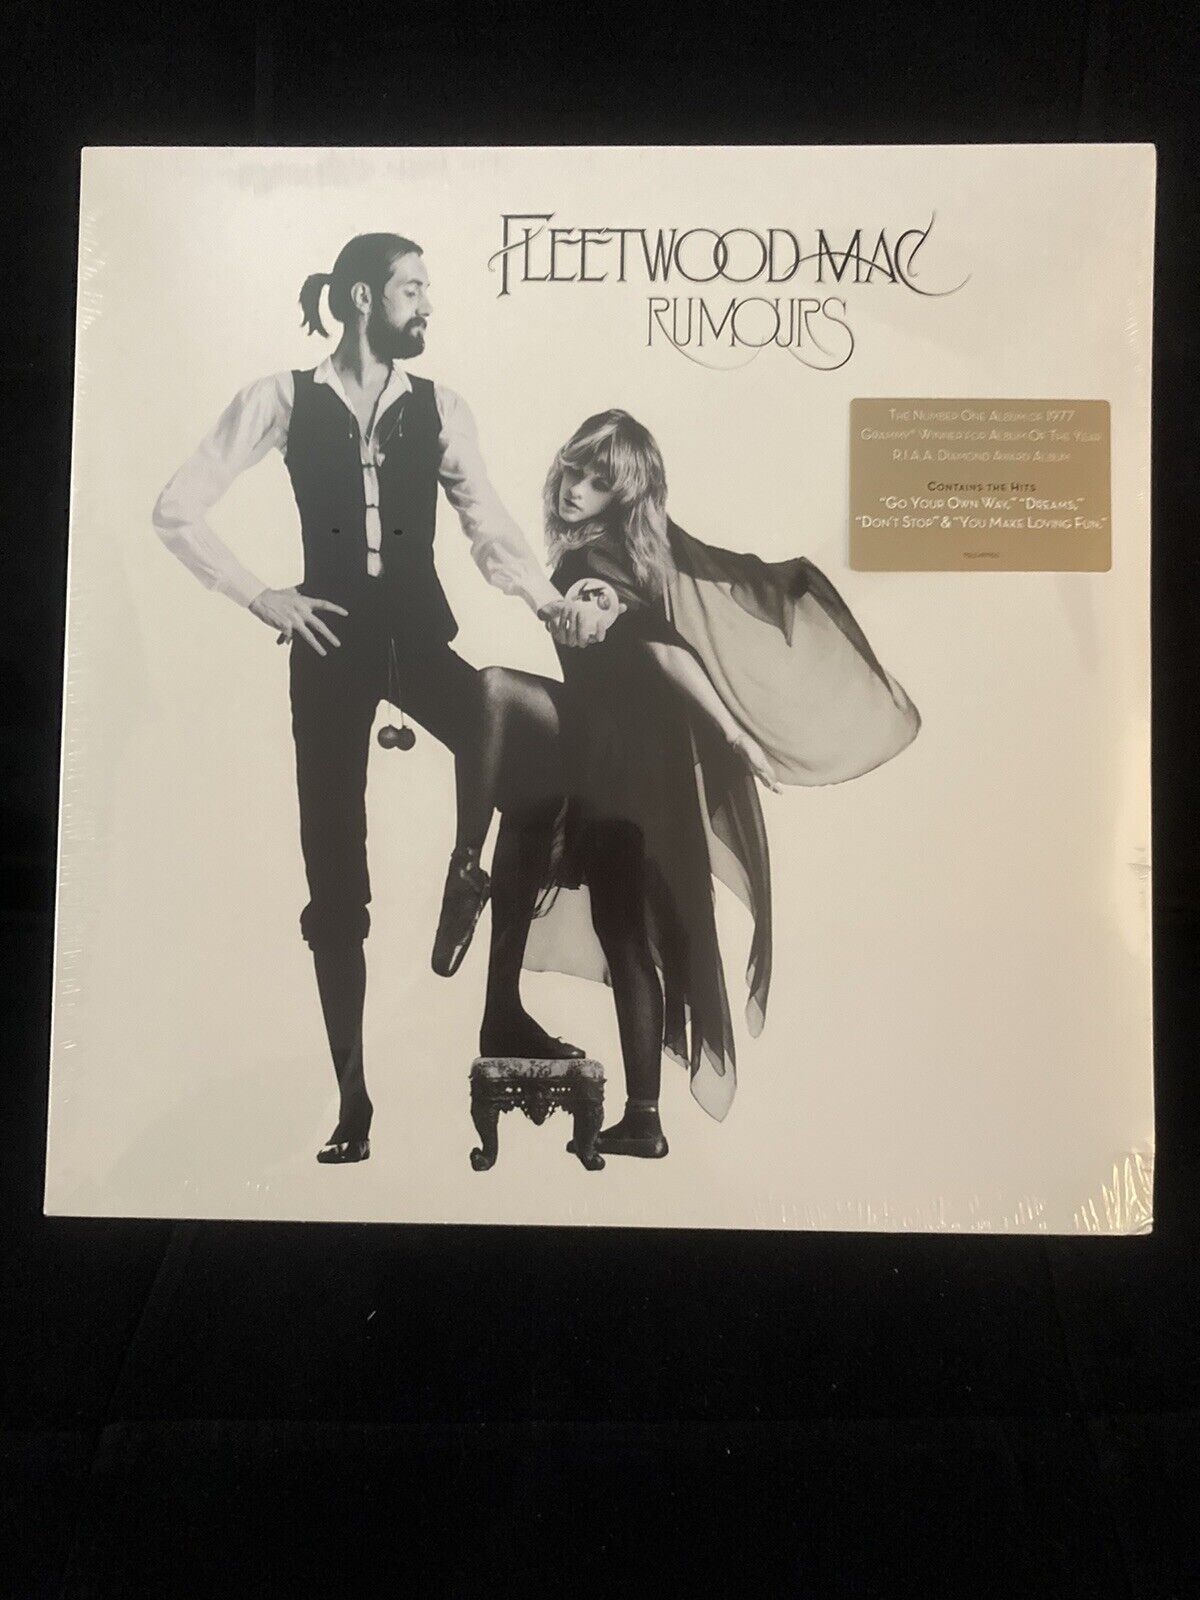 Fleetwood Mac -Rumours Vinyl LP Record - Rumors